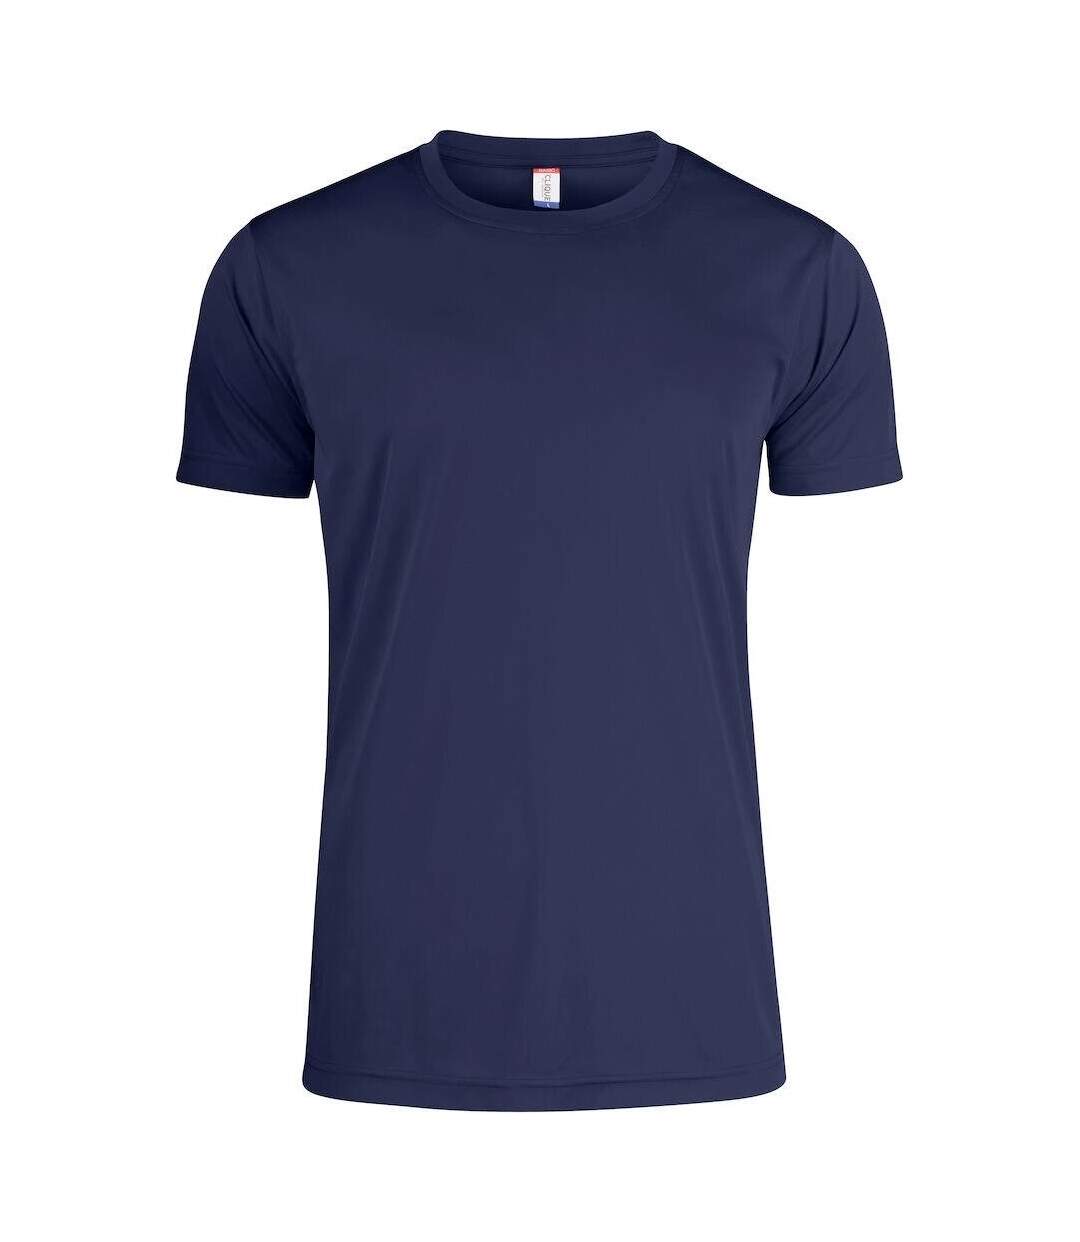 Clique - T-shirt - Homme (Bleu marine) - UTUB362